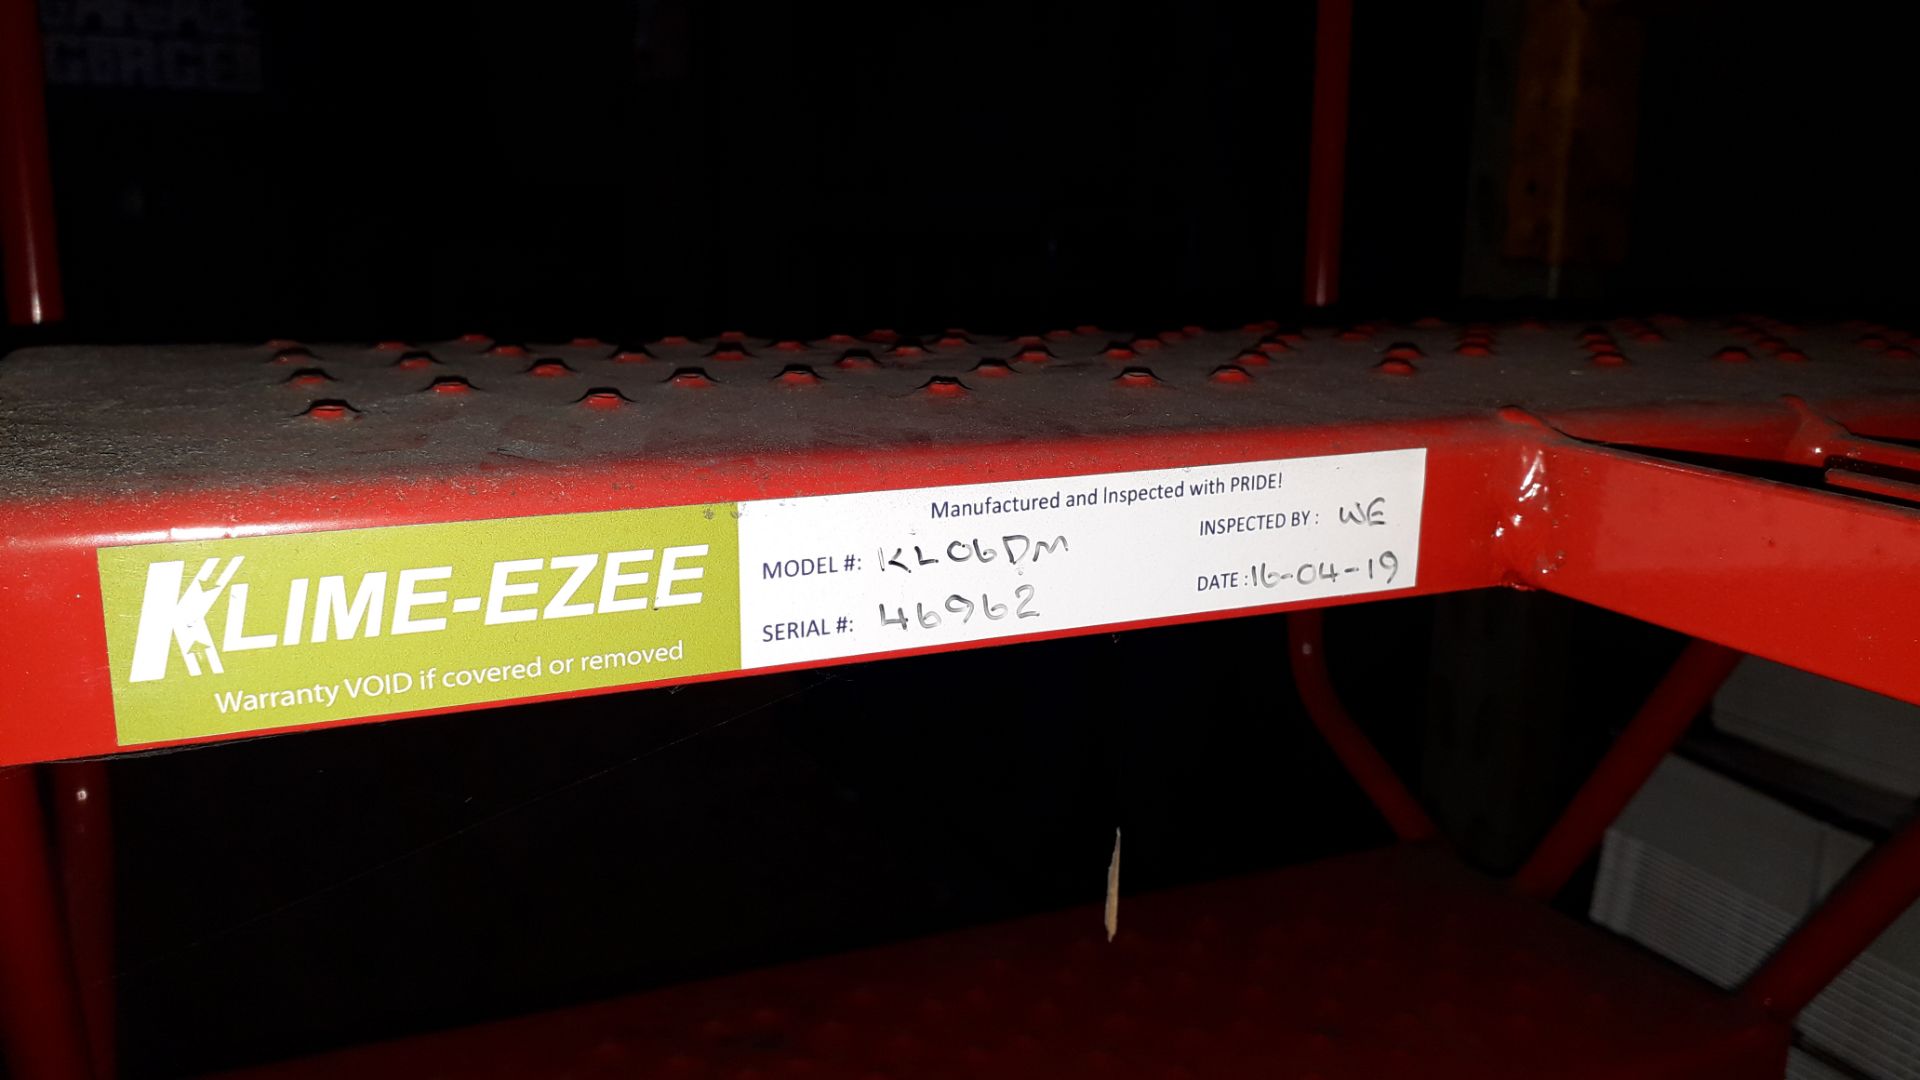 Klime-Ezee KL06DM Steel 6 Tread Access Platform, Serial Number 46962 (2019) - Image 3 of 3